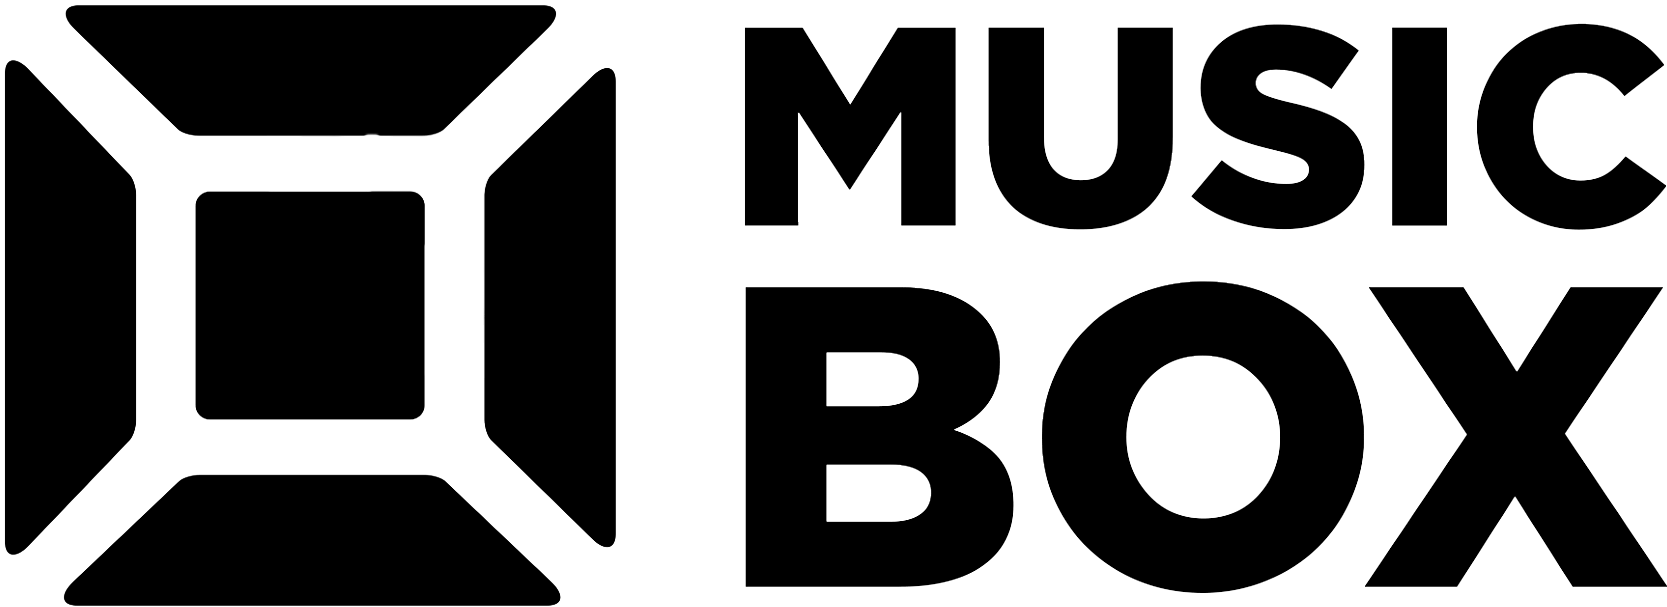 music box logo png.png